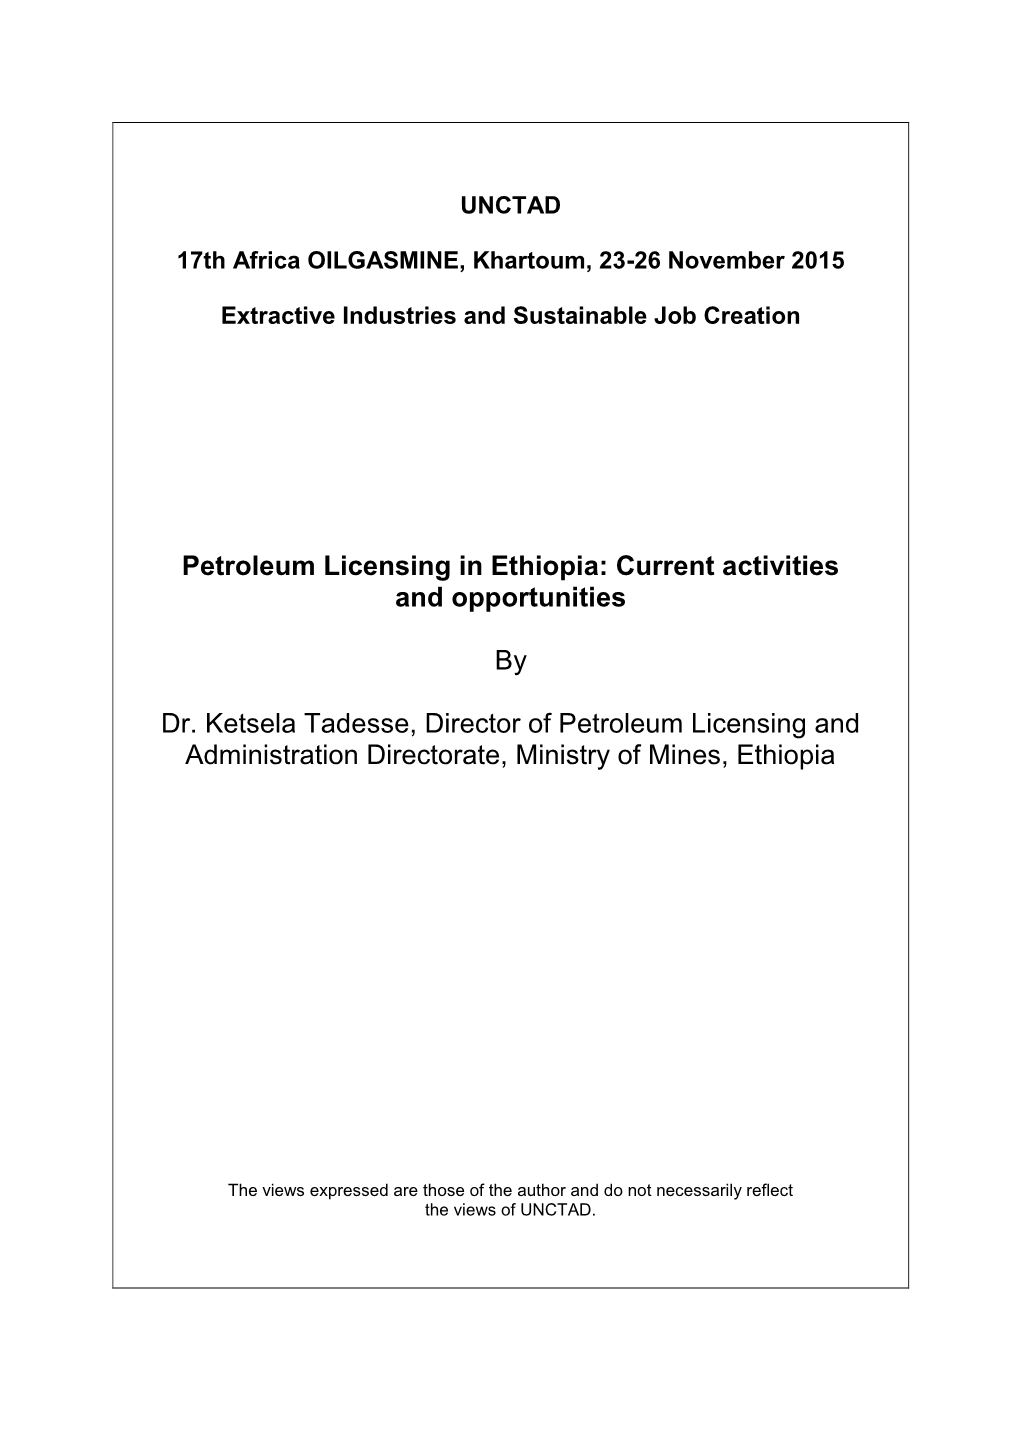 Petroleum Licensing in Ethiopia: Current Activities and Opportunities